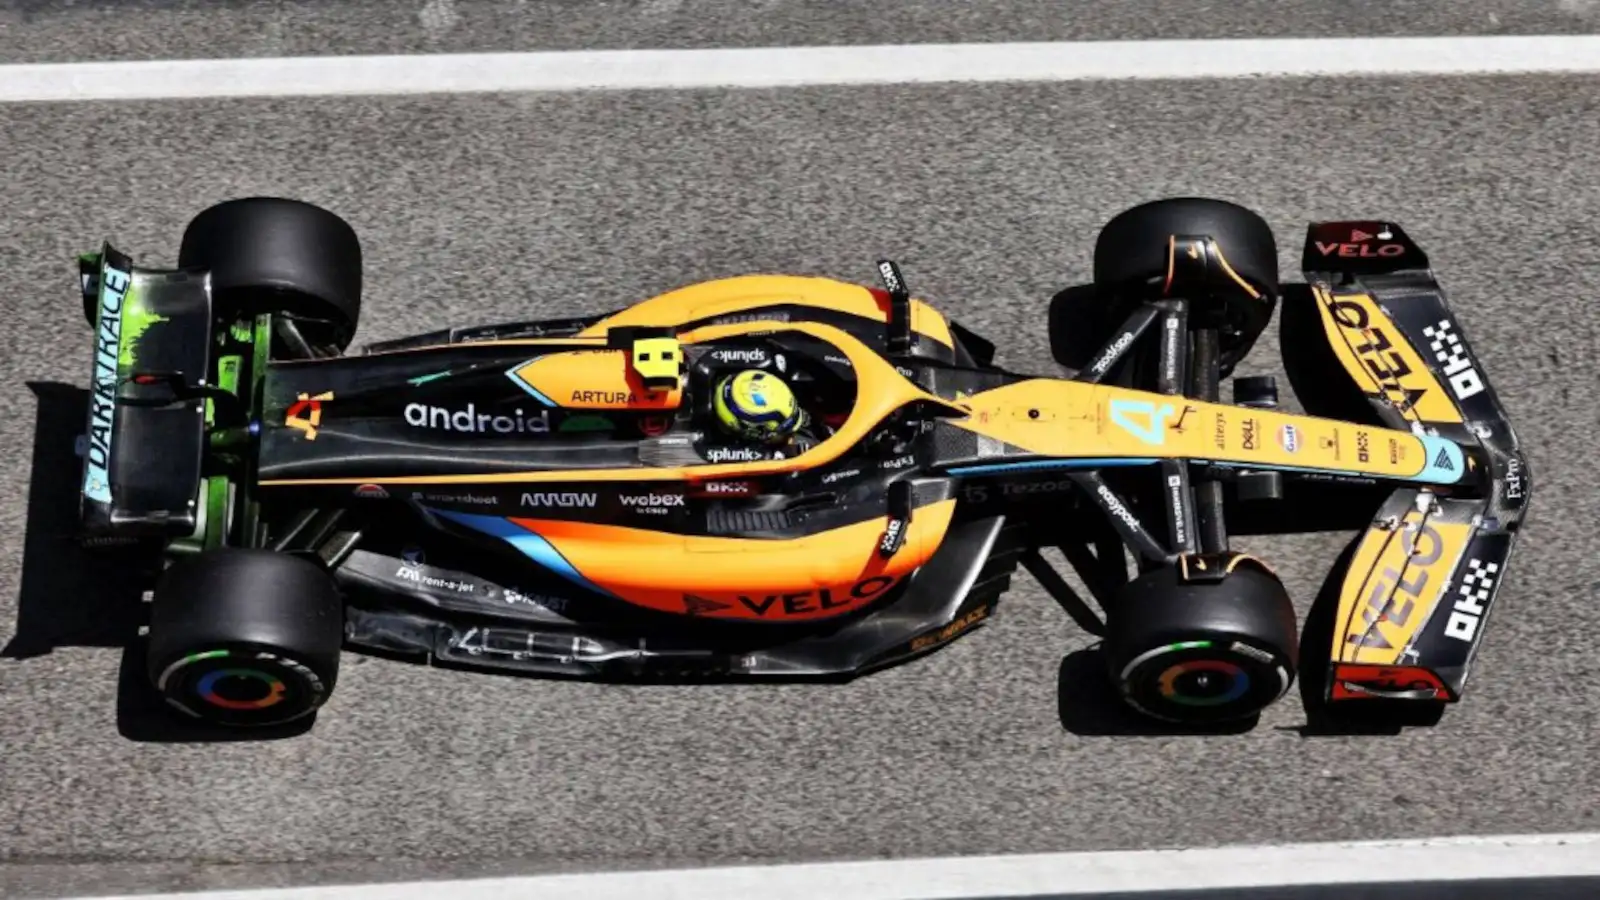 Lando Norris, McLaren, with flo vis paint on rear wing. Spain May 2022